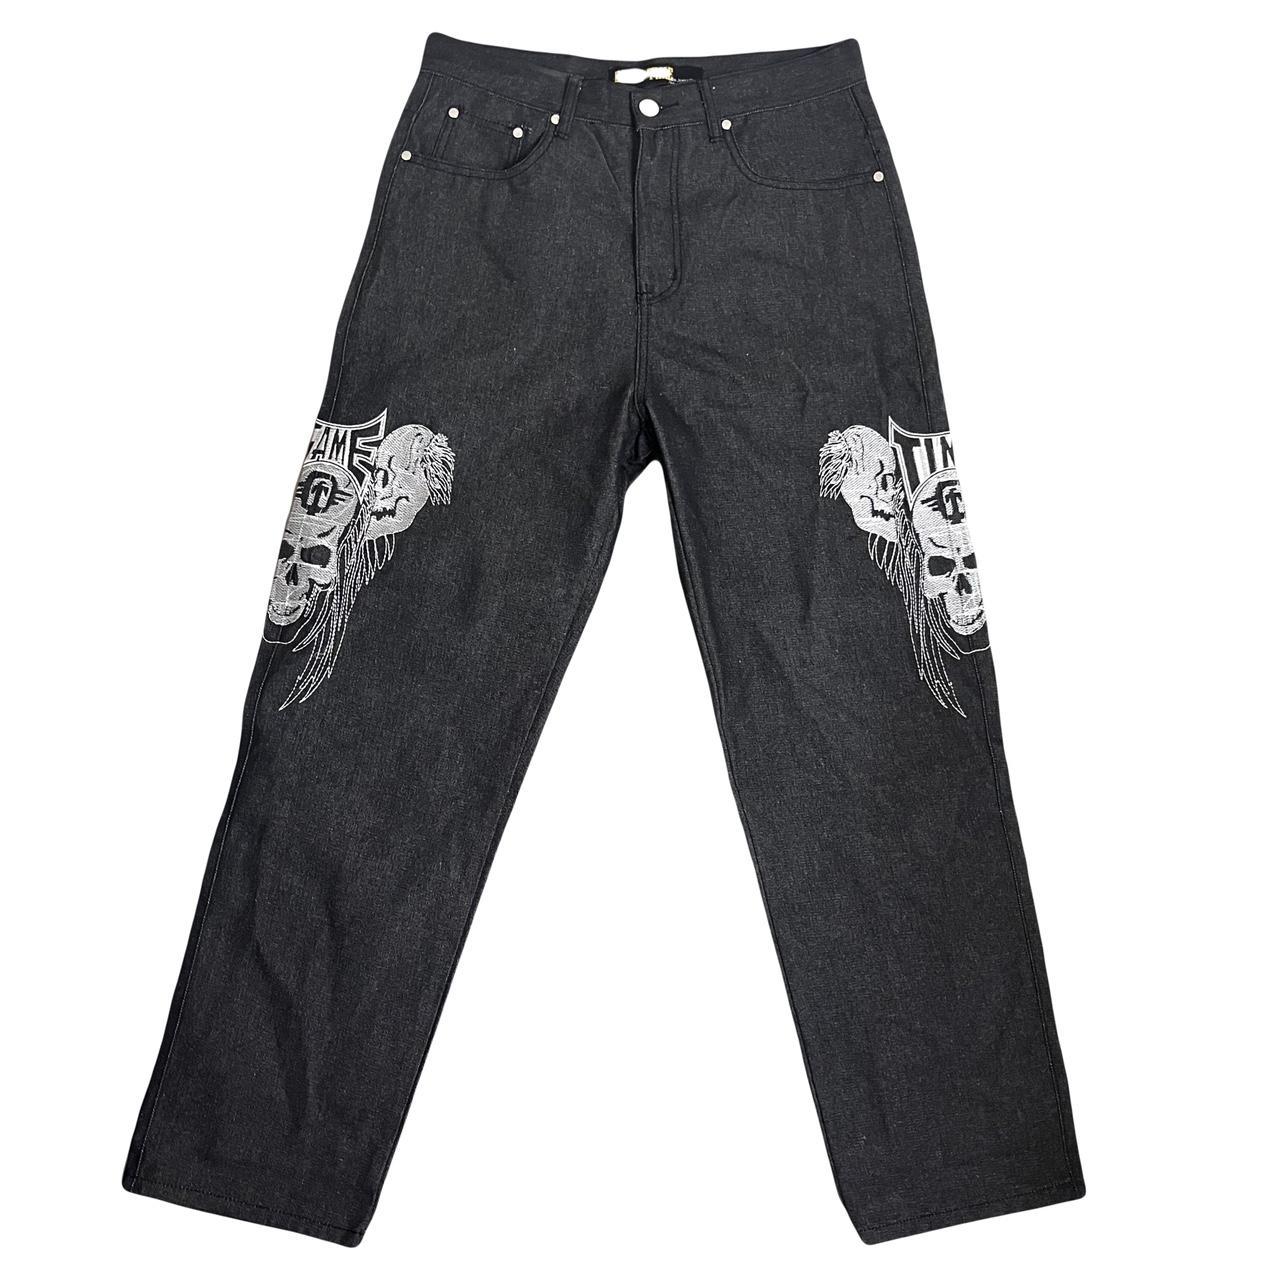 Y2k embroidered Jesse Pinkman Jnco style jeans Size... - Depop